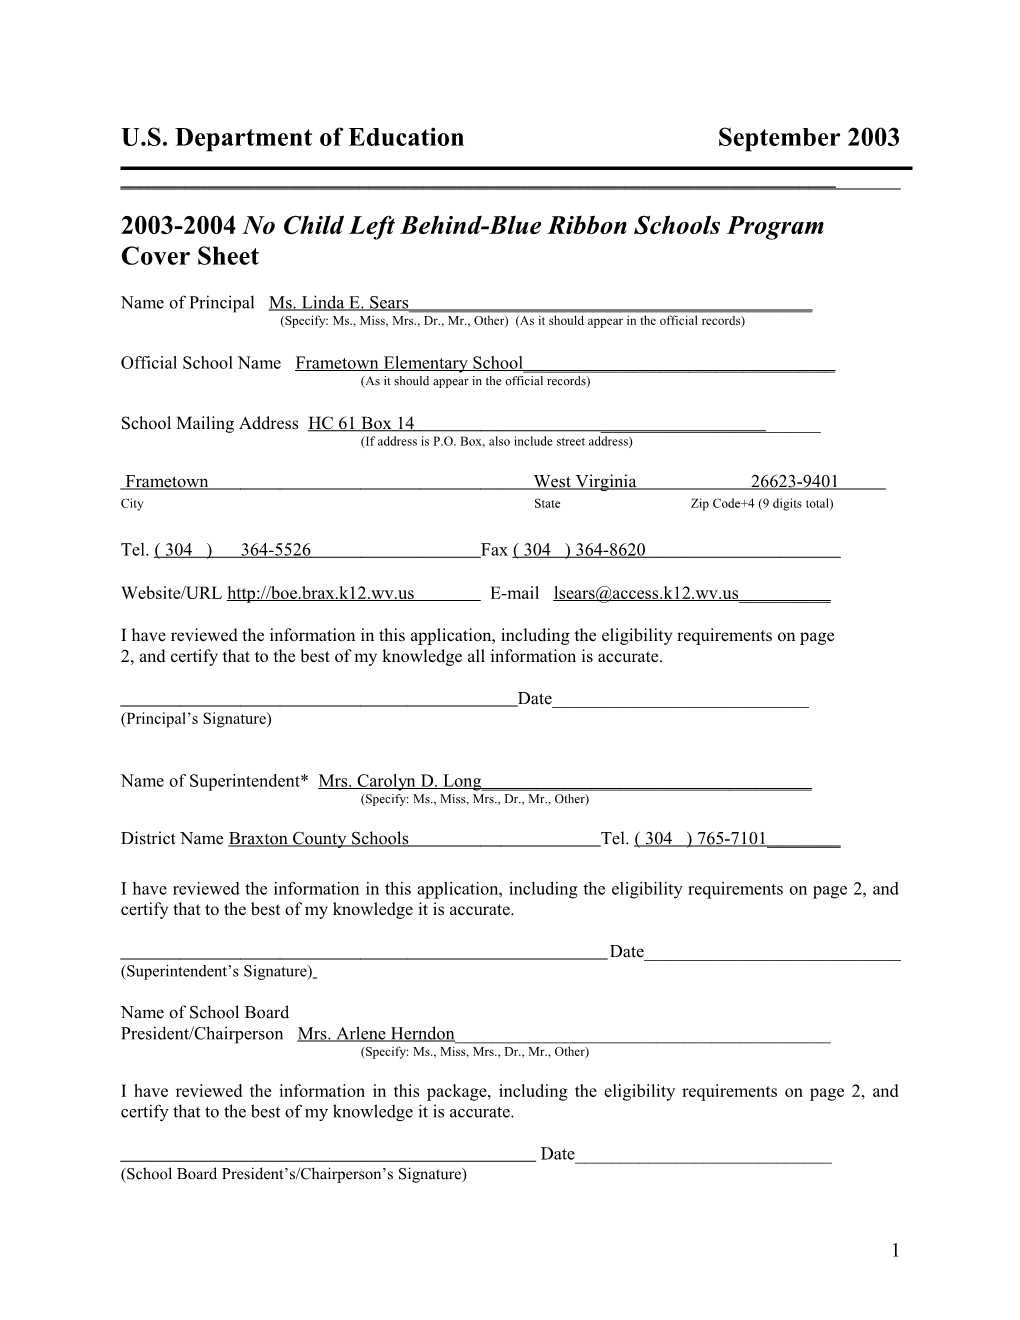 Frametown Elementary School 2004 No Child Left Behind-Blue Ribbon School Application (Msword)